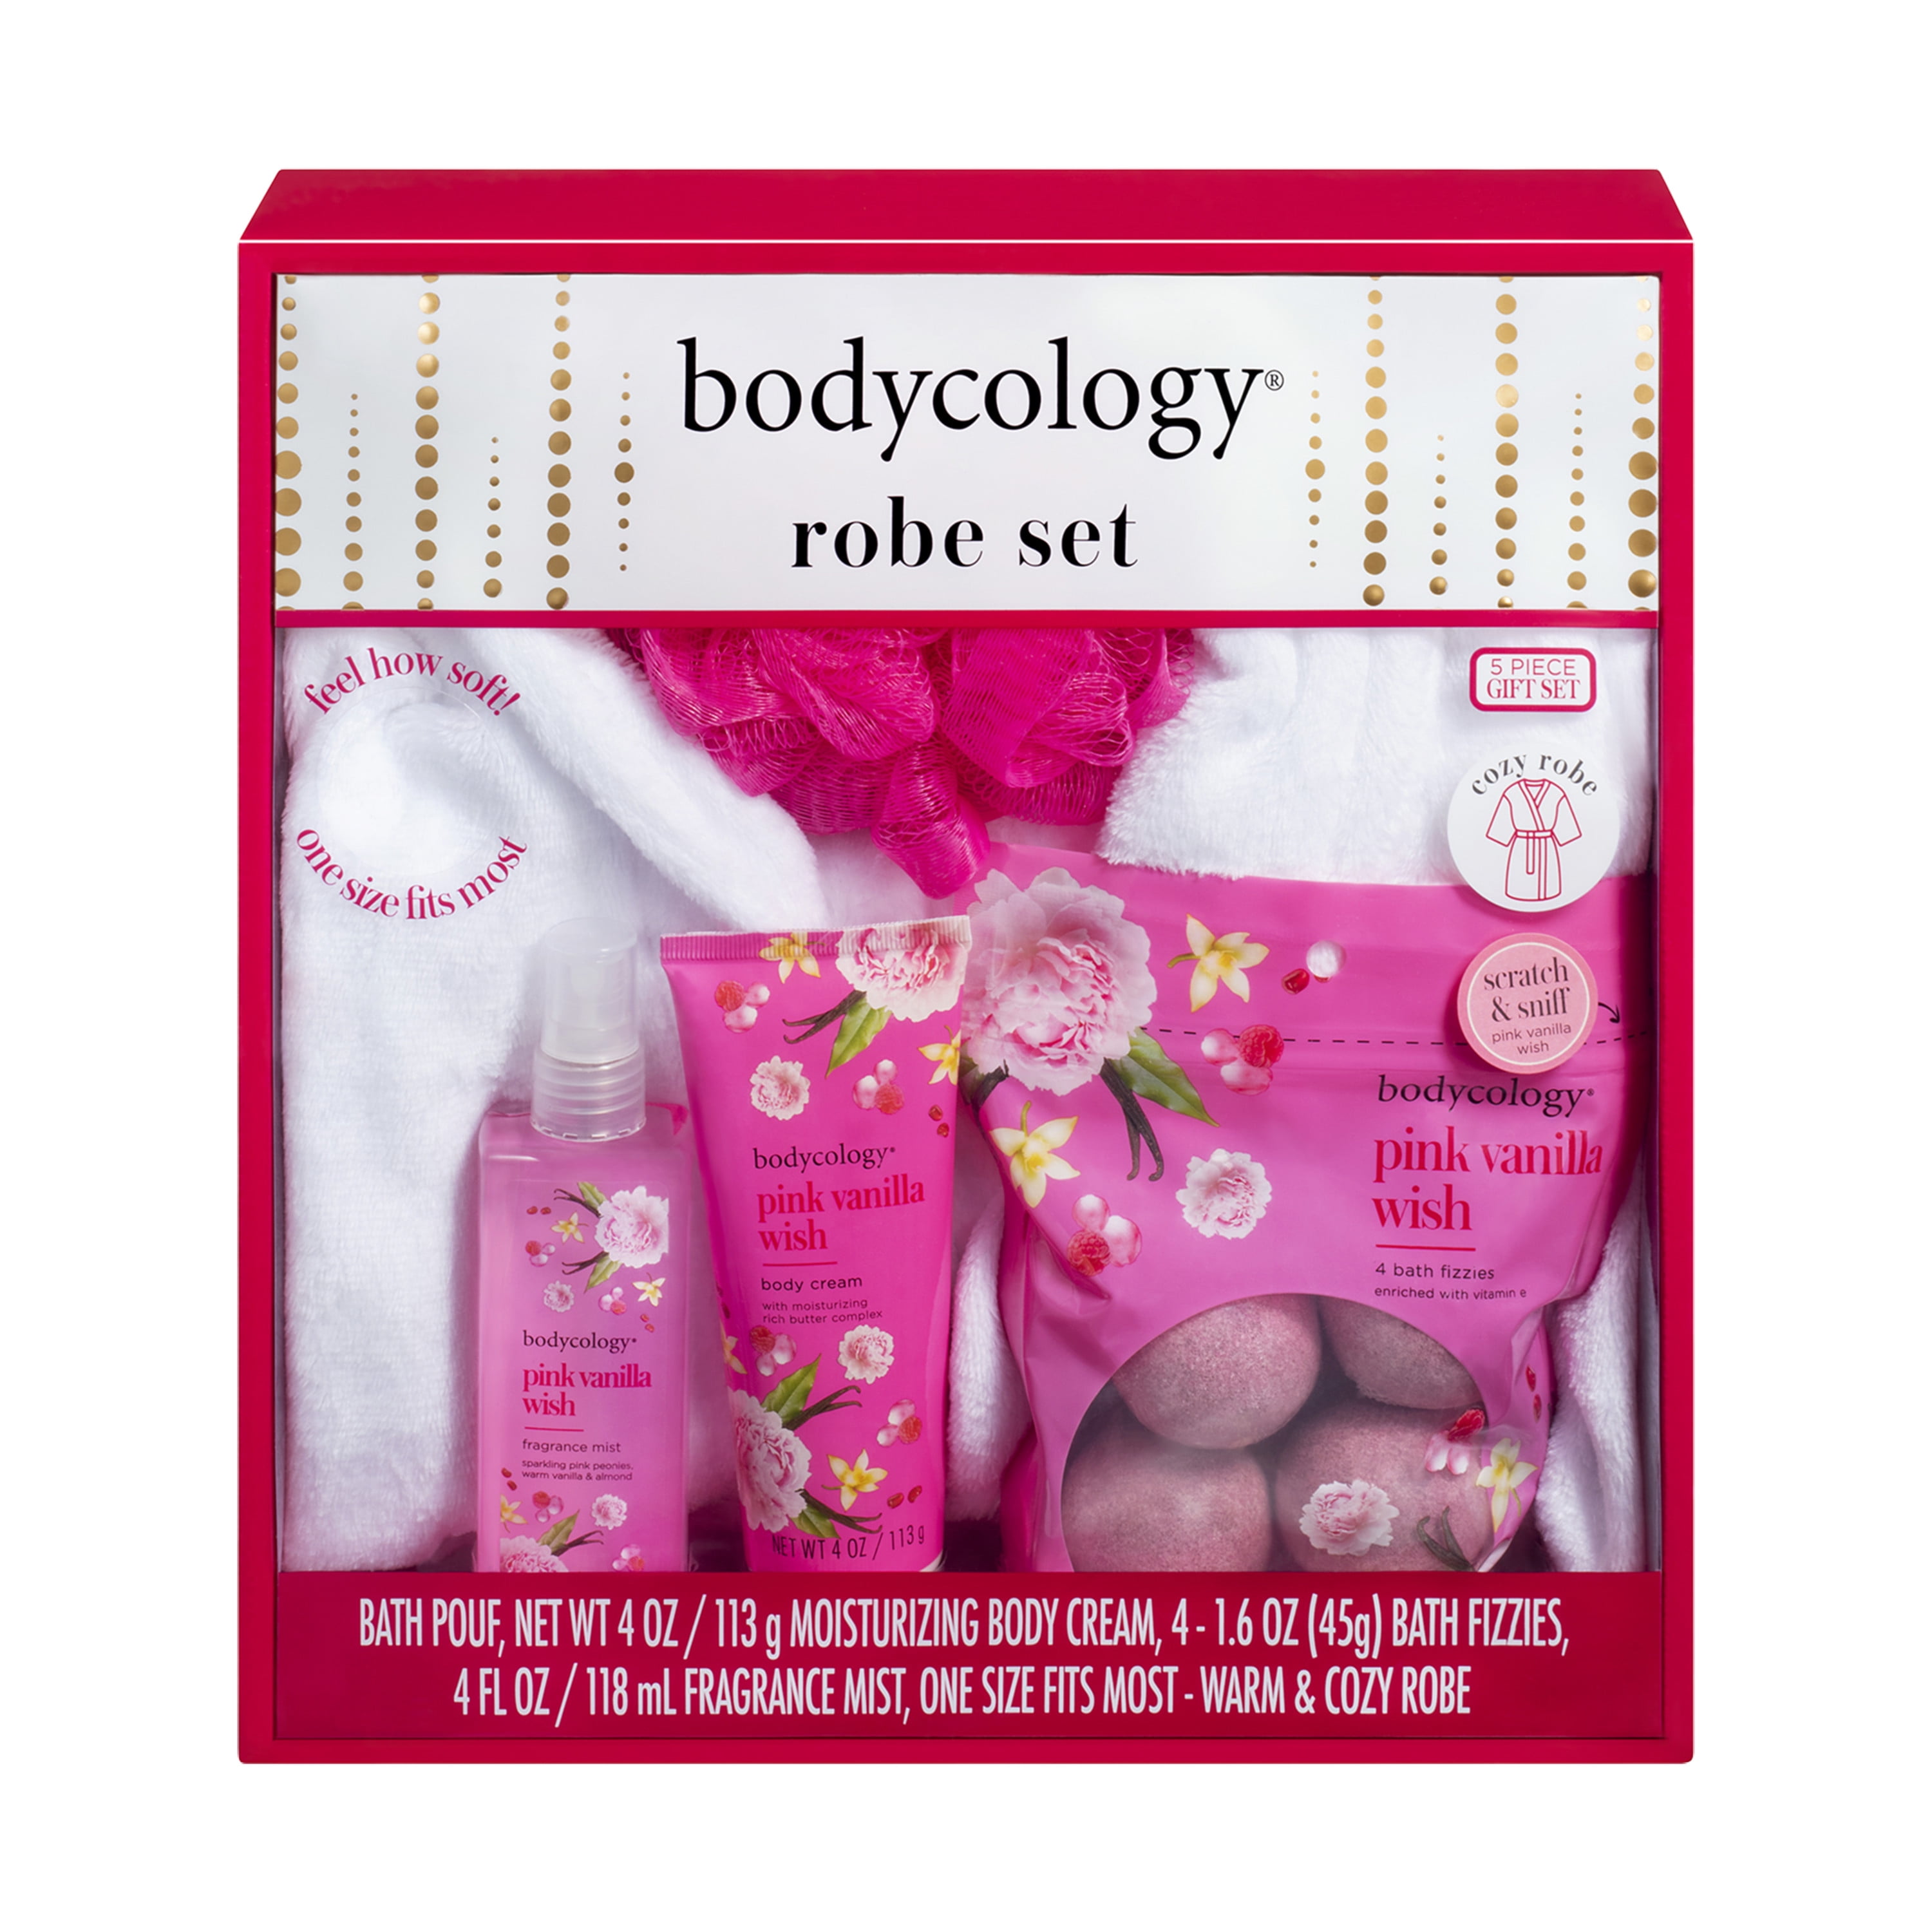 Bodycology Pink Vanilla Wish Bath & Body Set with Robe, 5 Piece